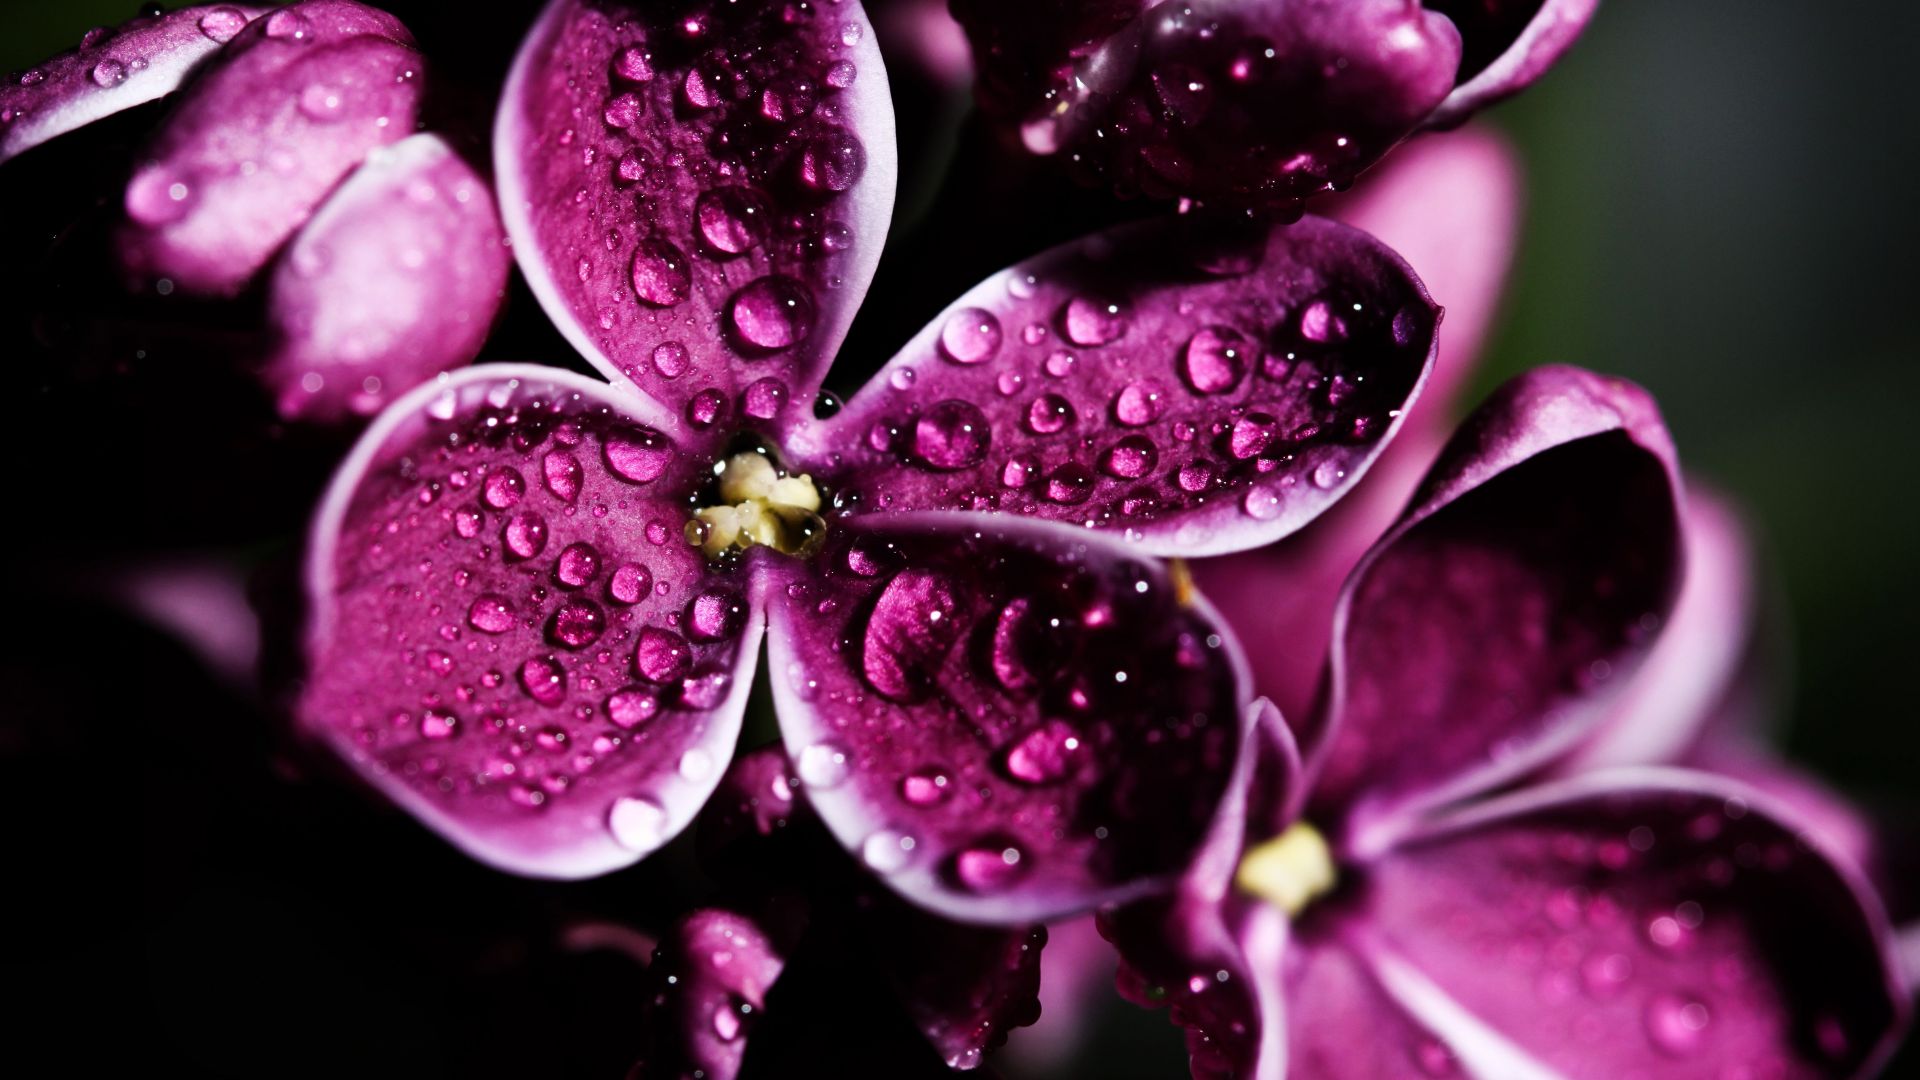 Сирень, 5k, 4k, 8k, фиолетовый, капли, Lilac, 5k, 4k wallpaper, 8k, purple, drops (horizontal)